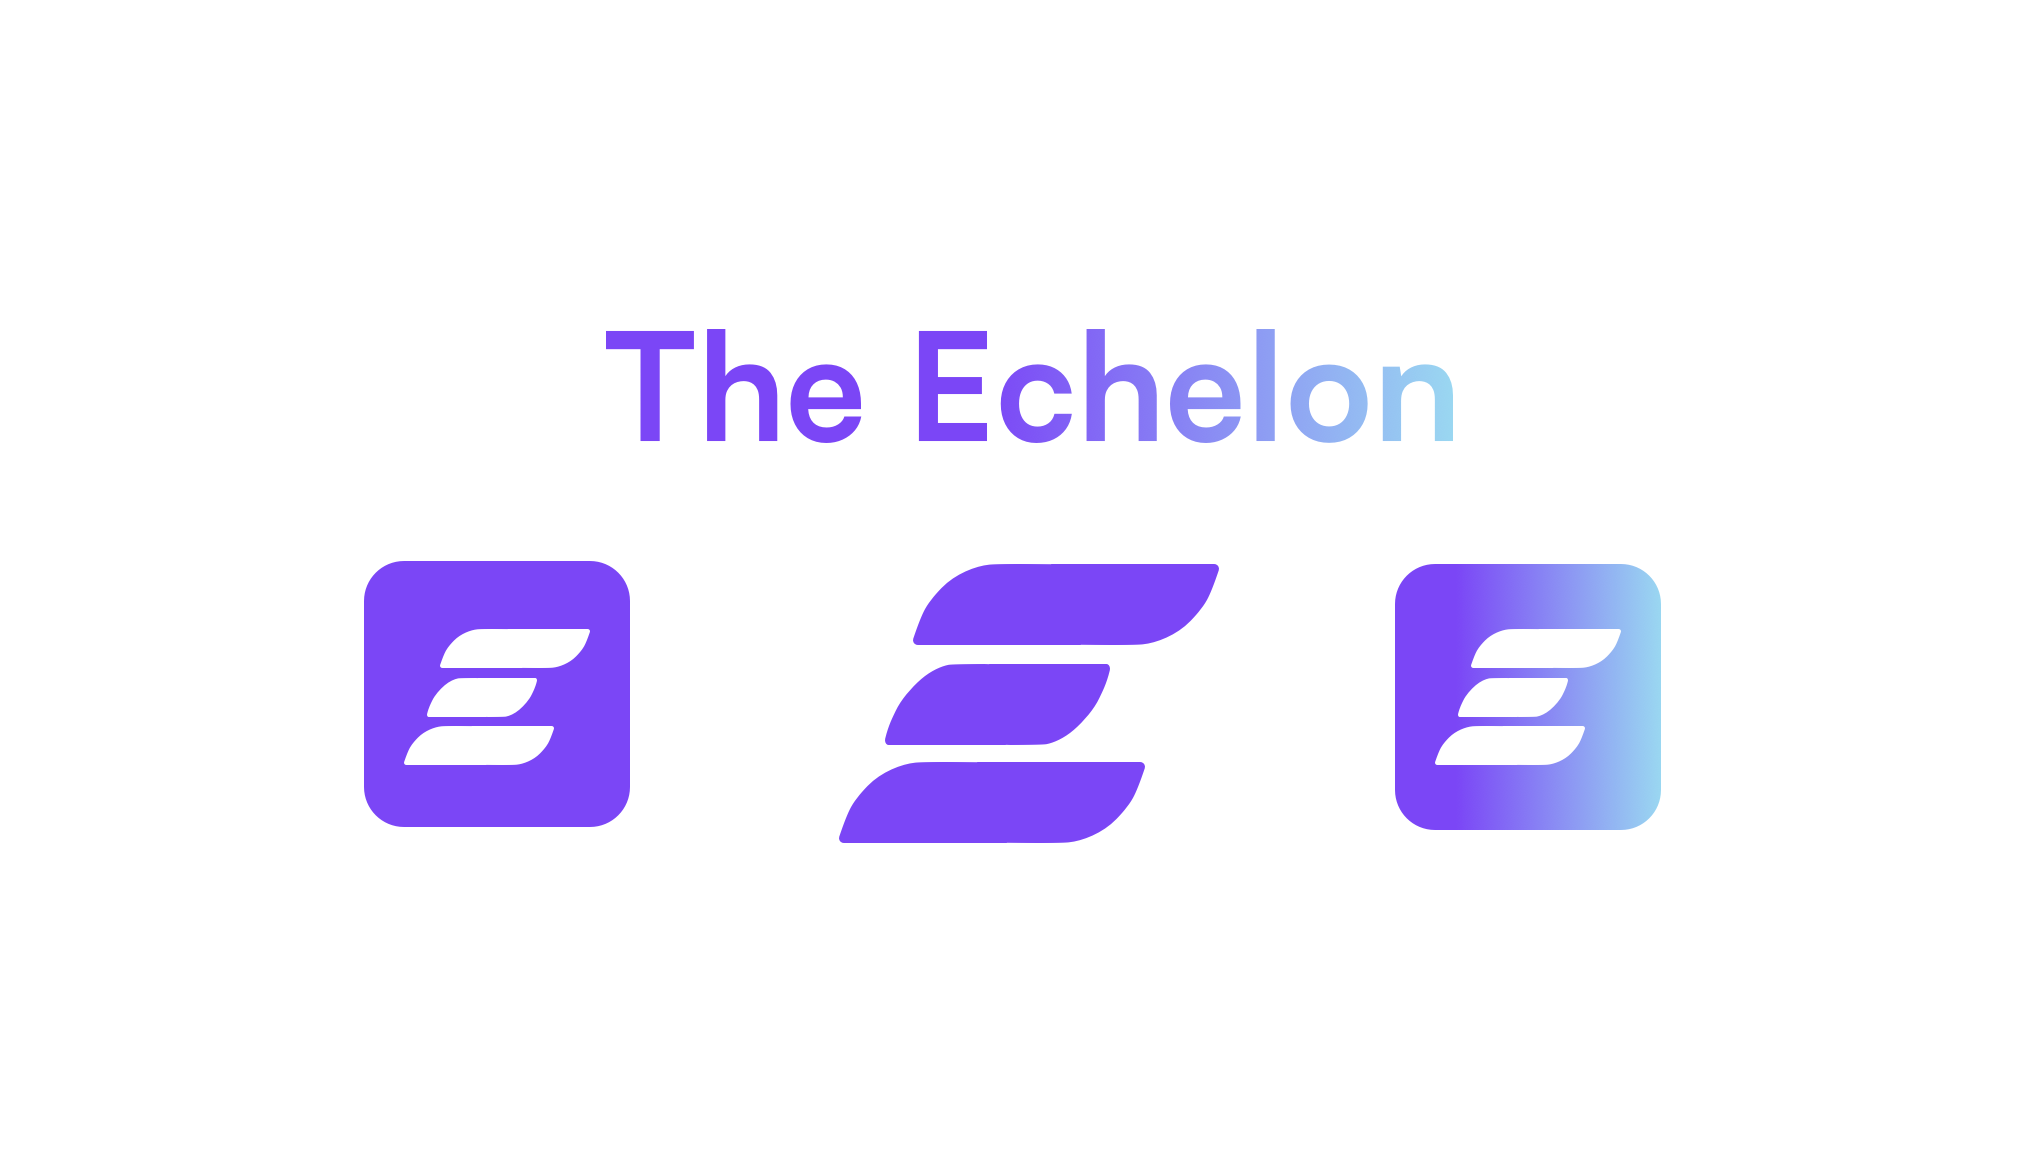 Our new logo: The Echelon